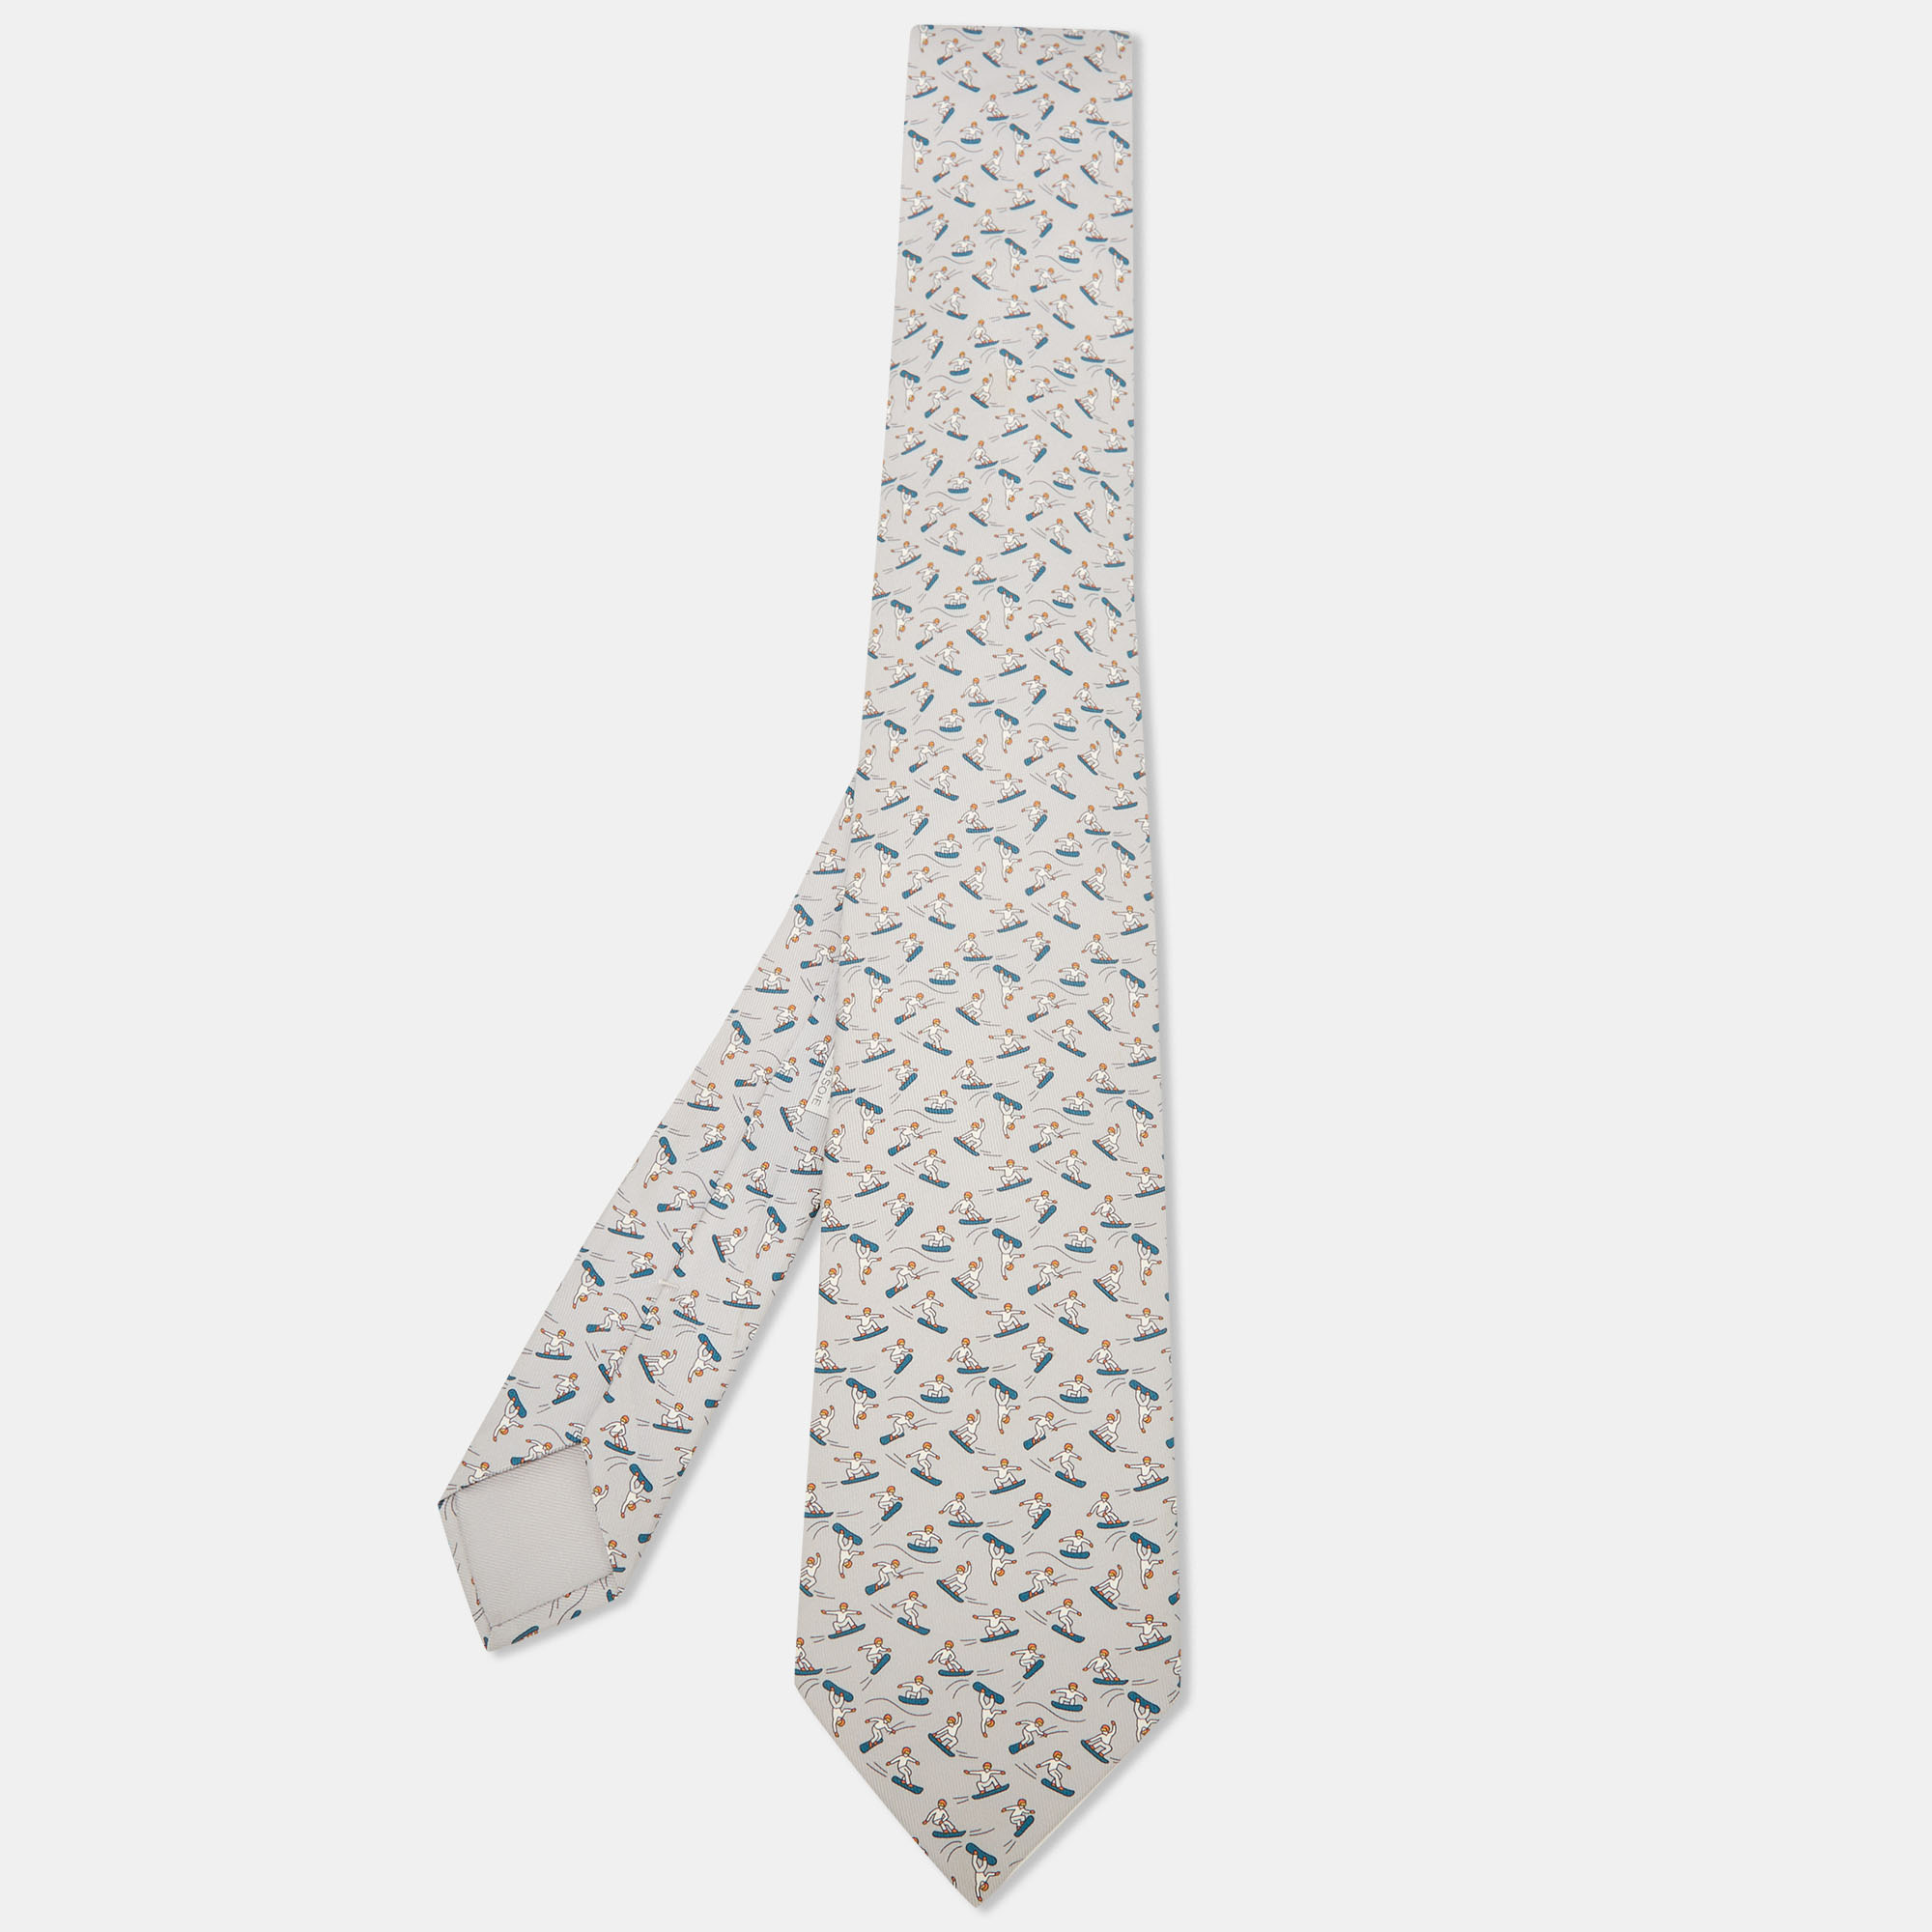 Hermes light grey snow park print silk tie